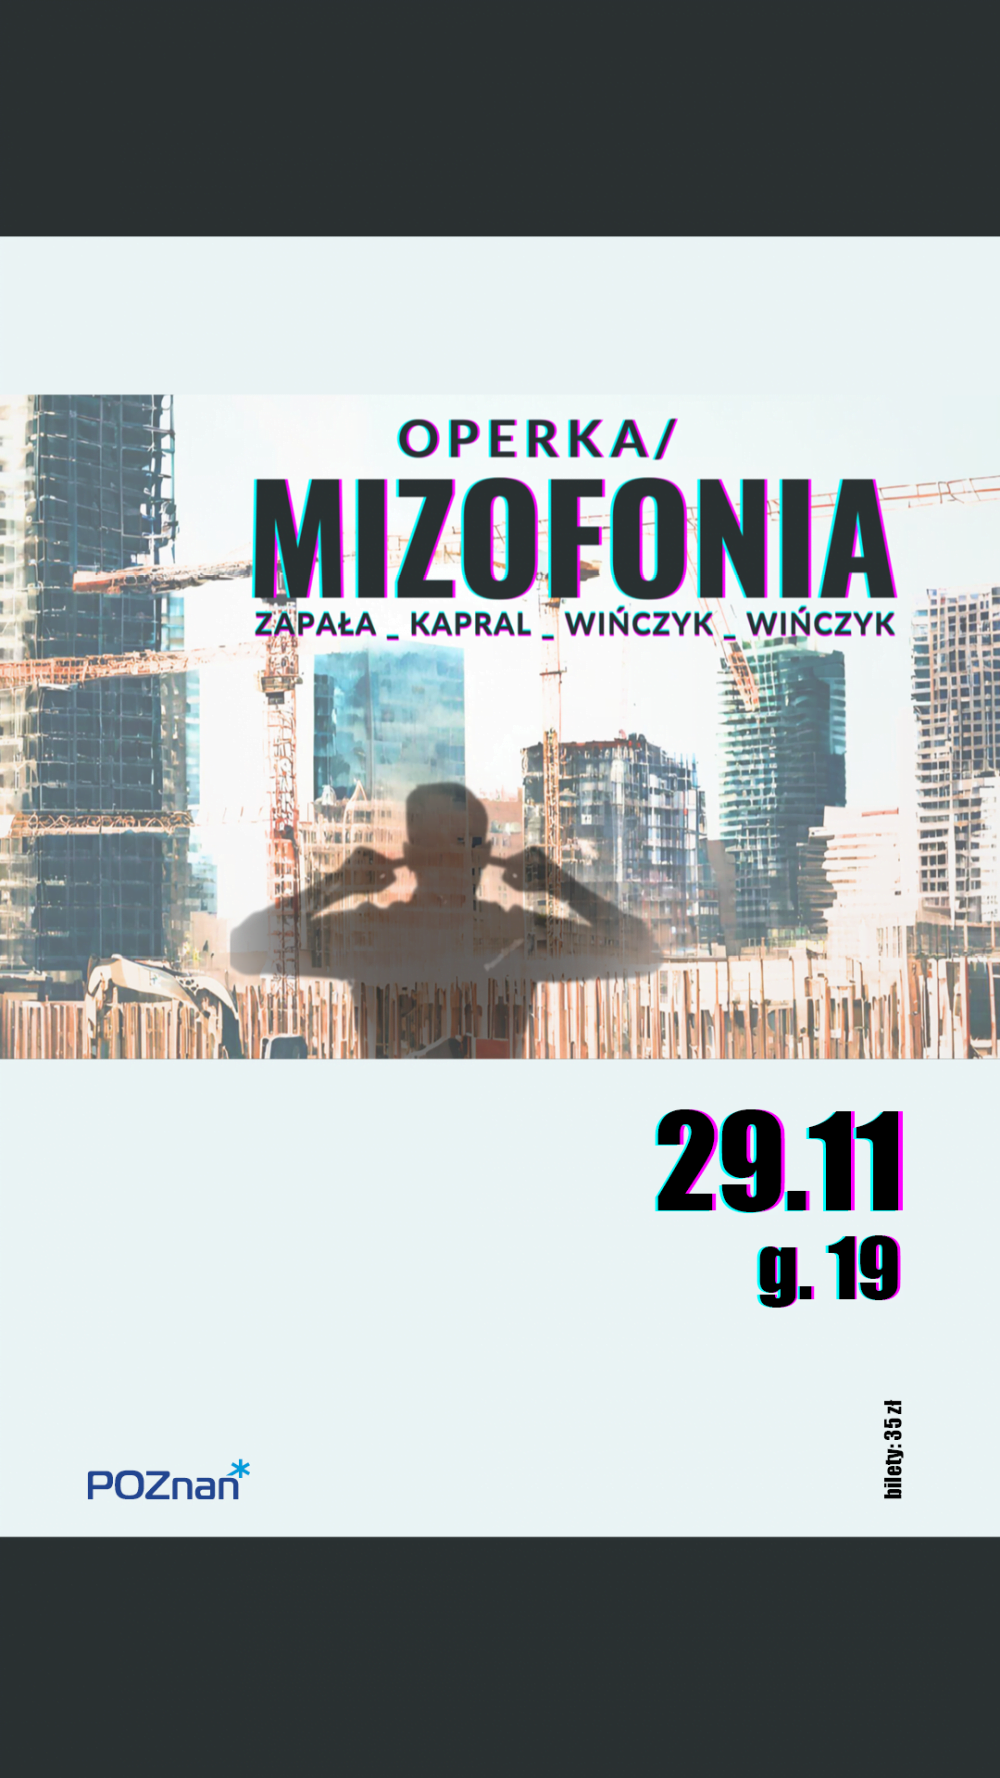 Operka/ MIZOFONIA (538859)